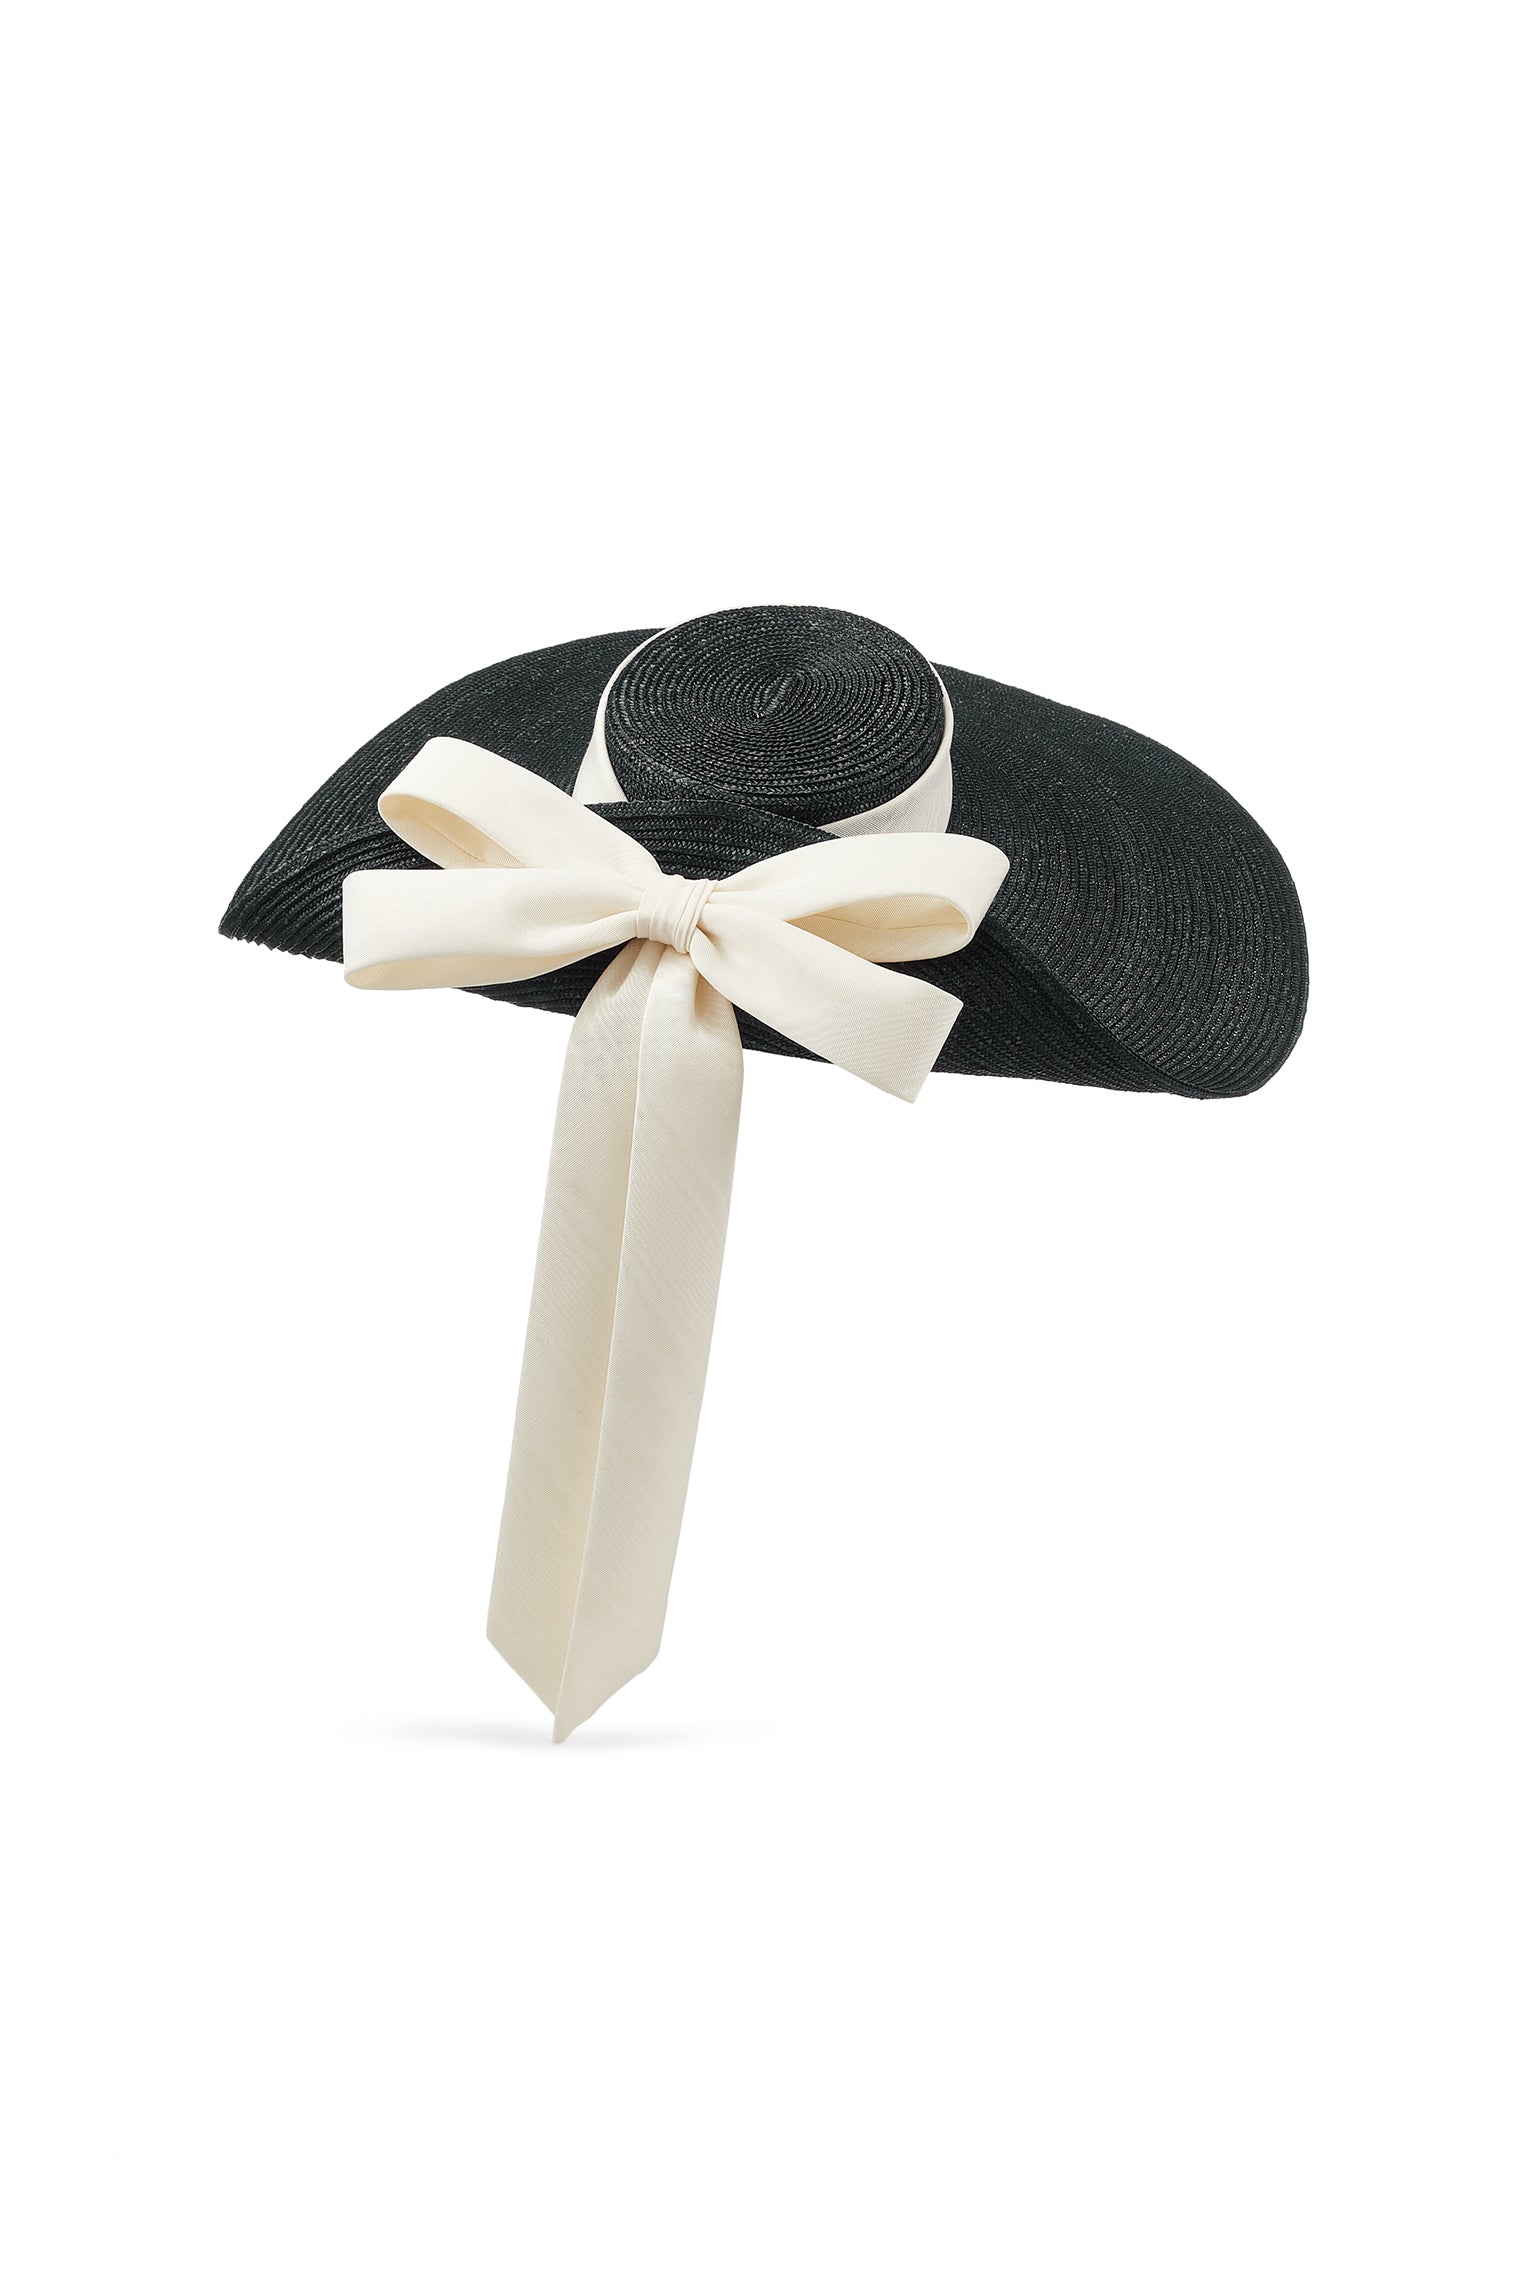 Lady Grey Black Wide Brim Hat - Panamas, Straw and Sun Hats for Women - Lock & Co. Hatters London UK